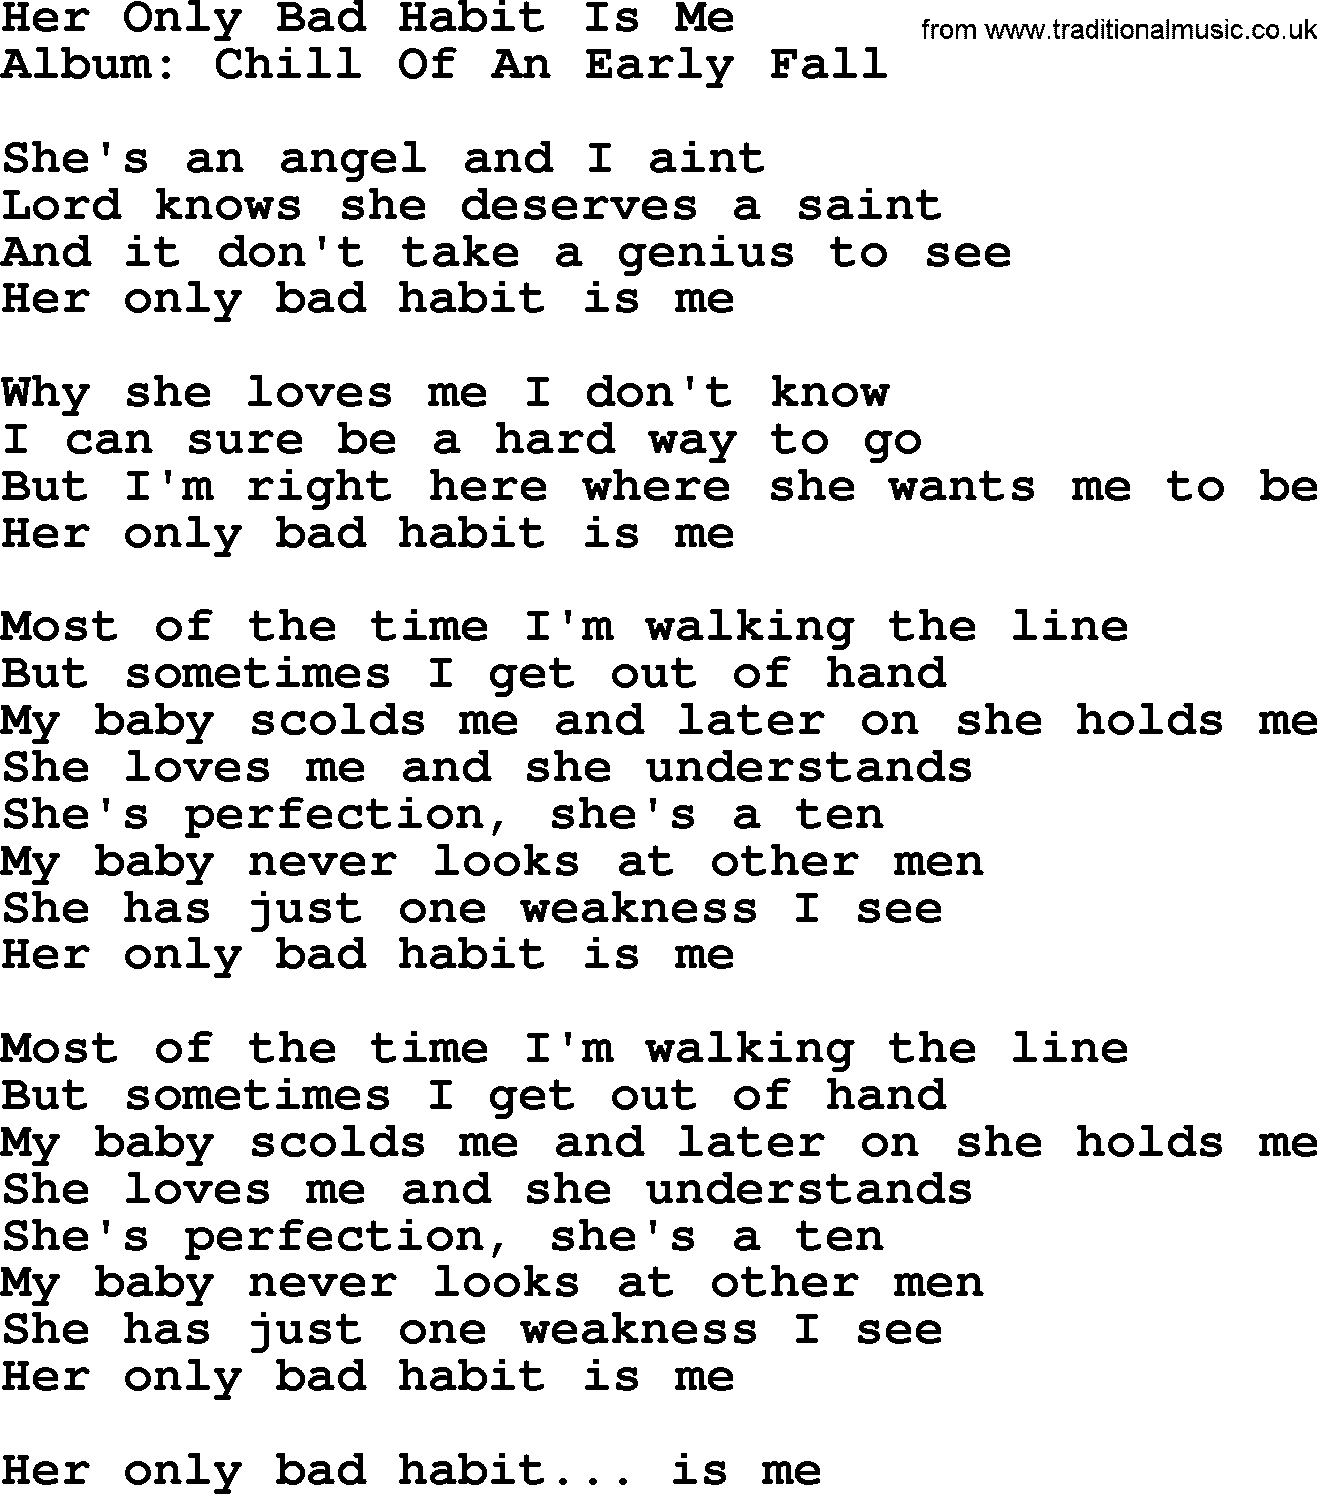 George Strait song: Her Only Bad Habit Is Me, lyrics